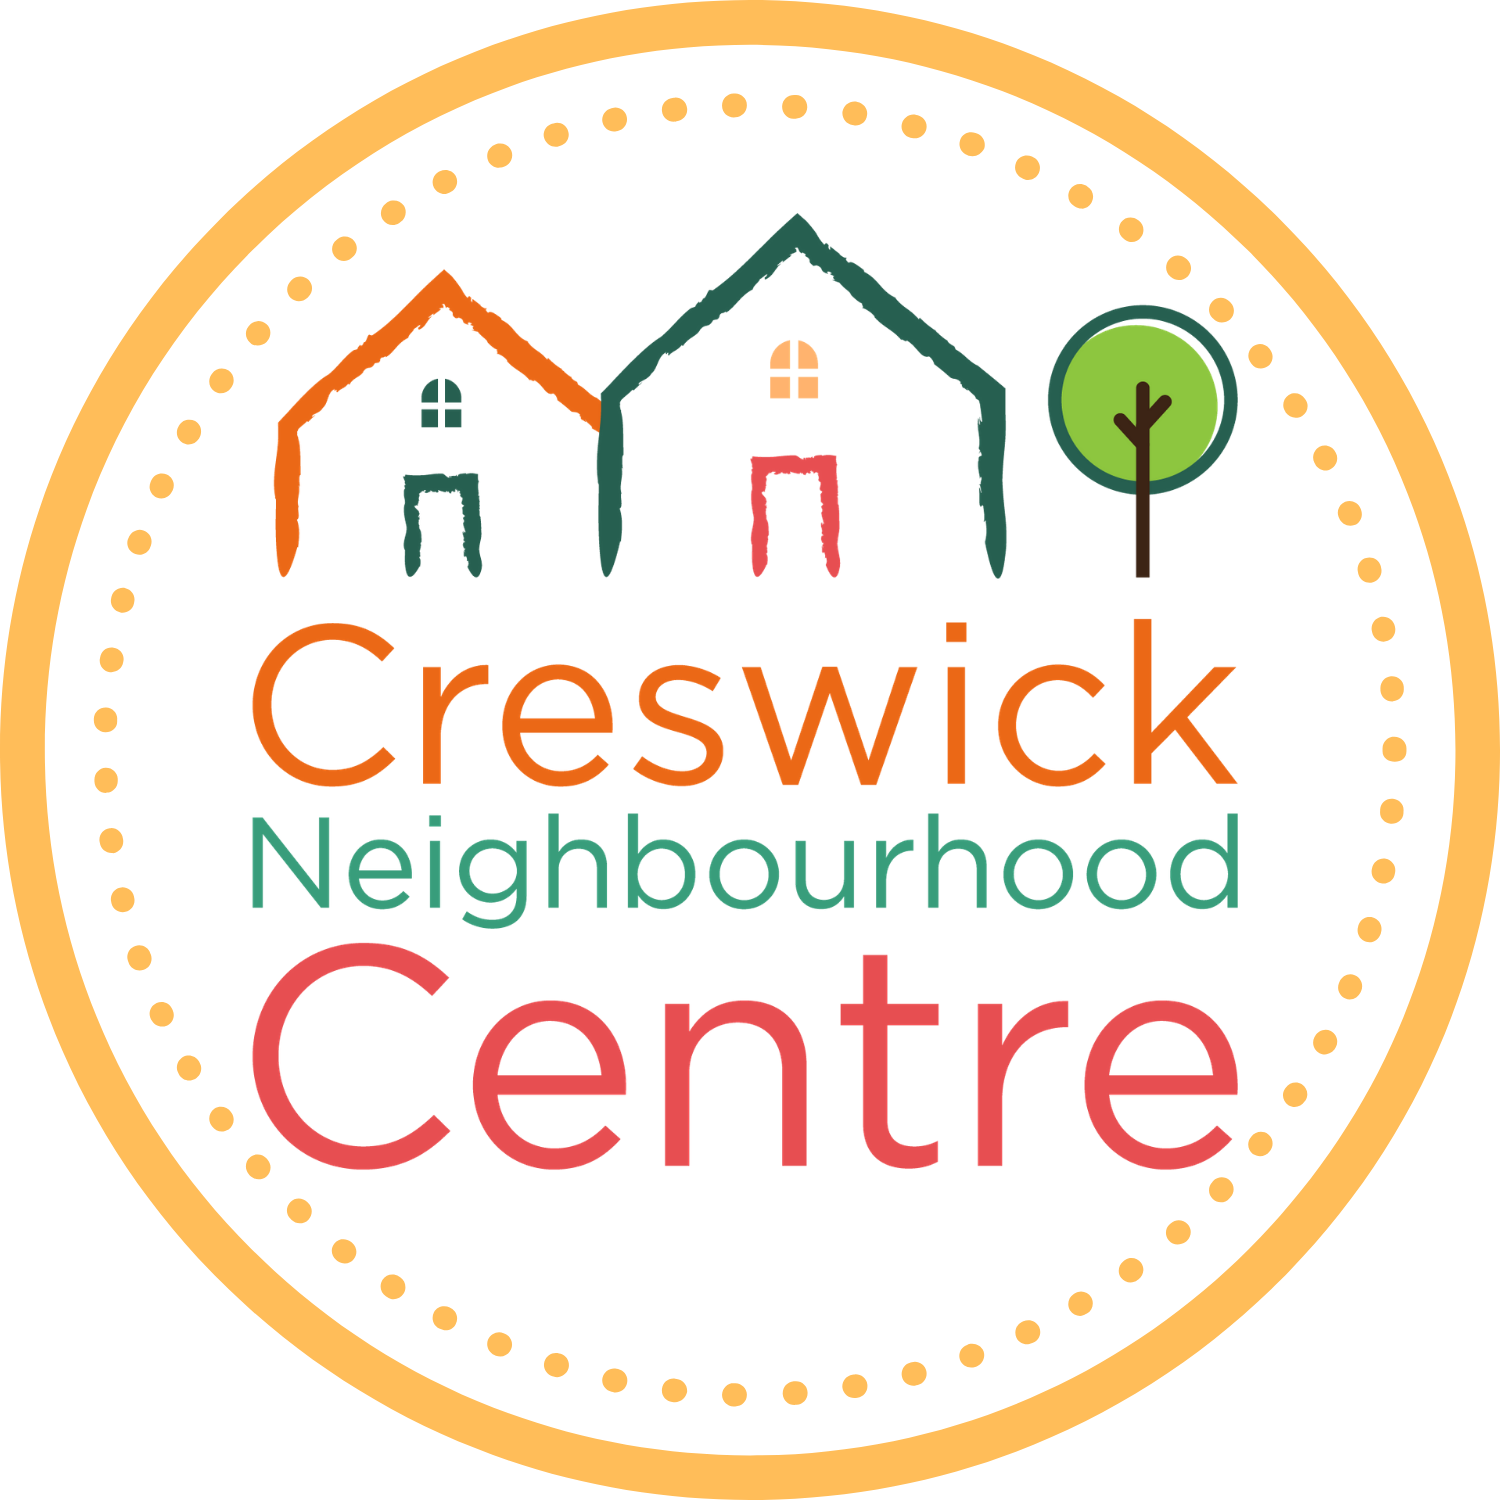 Creswick Neighbourhood Centre